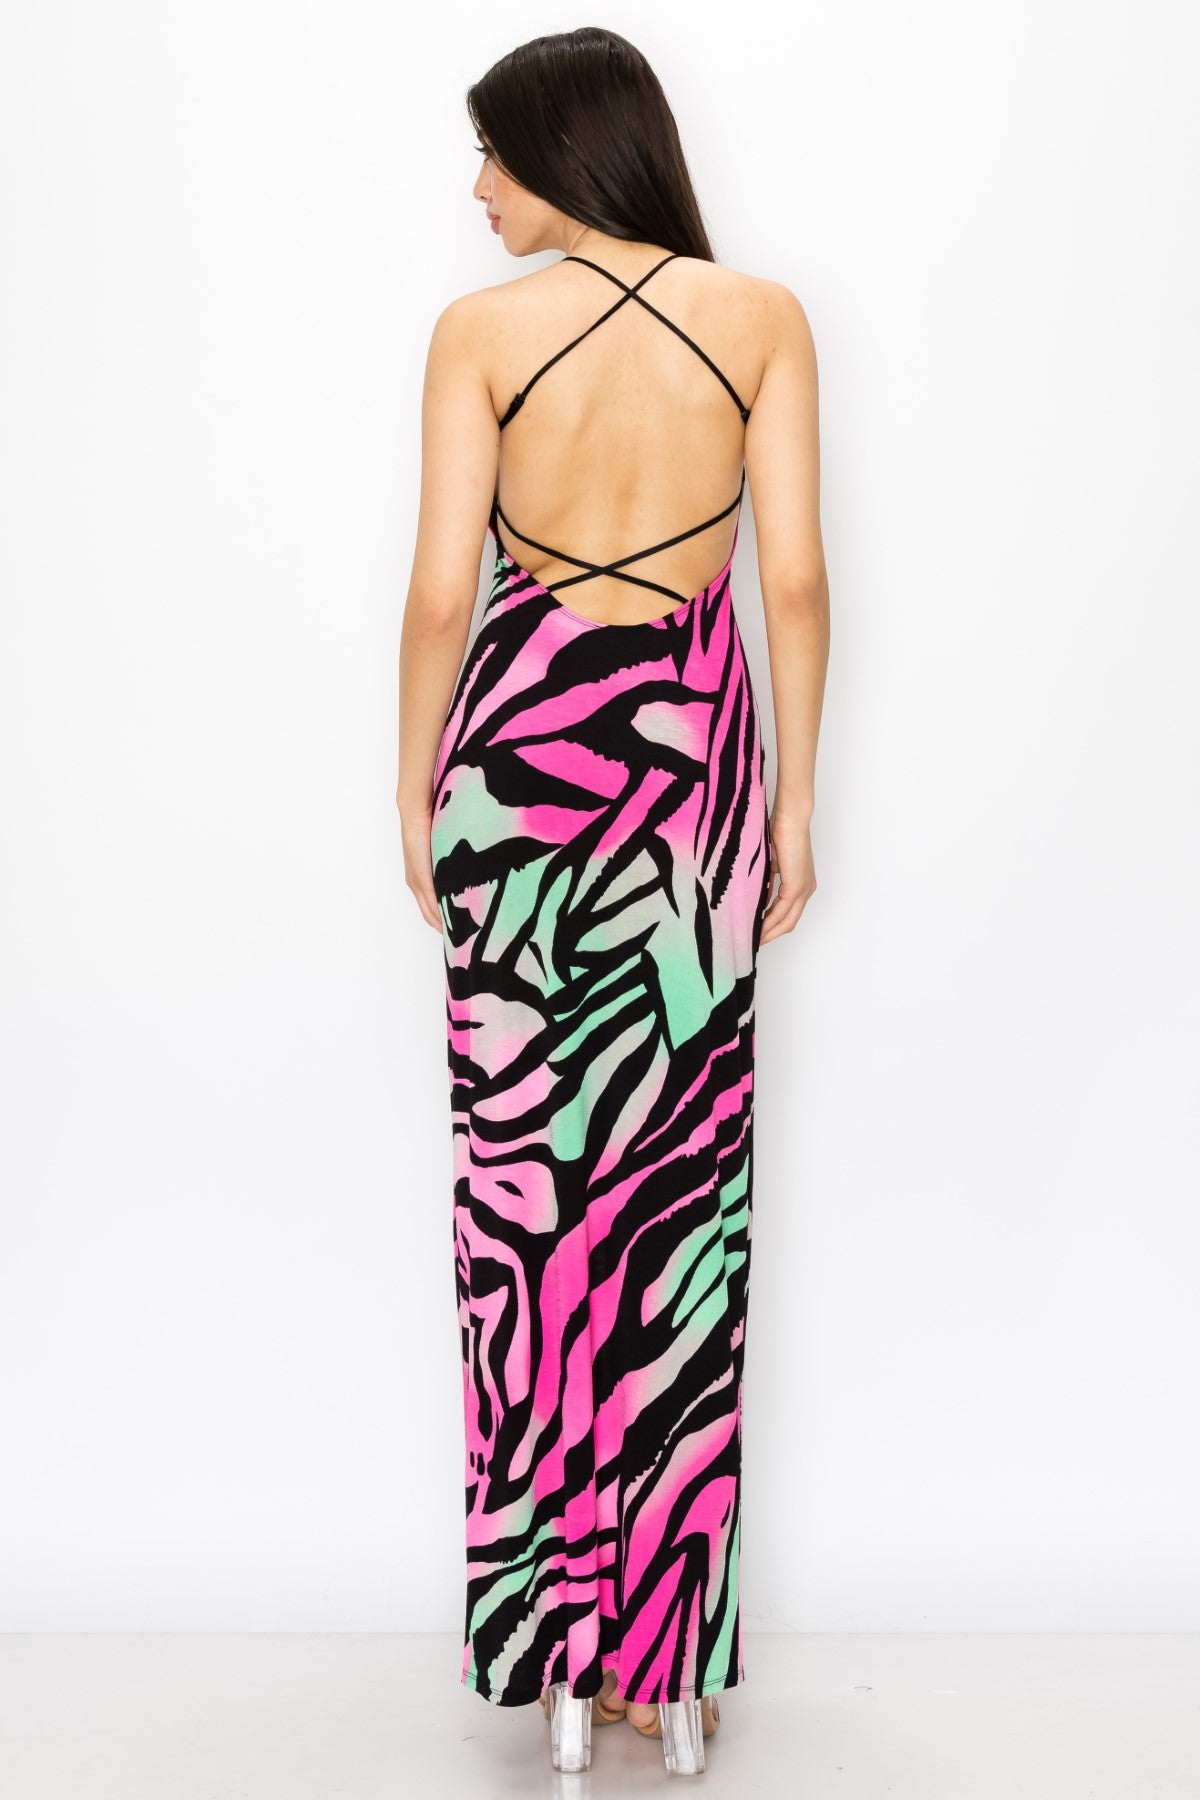 Chic Zebra Print With Open Back Criss Cross Strap Maxi Dress